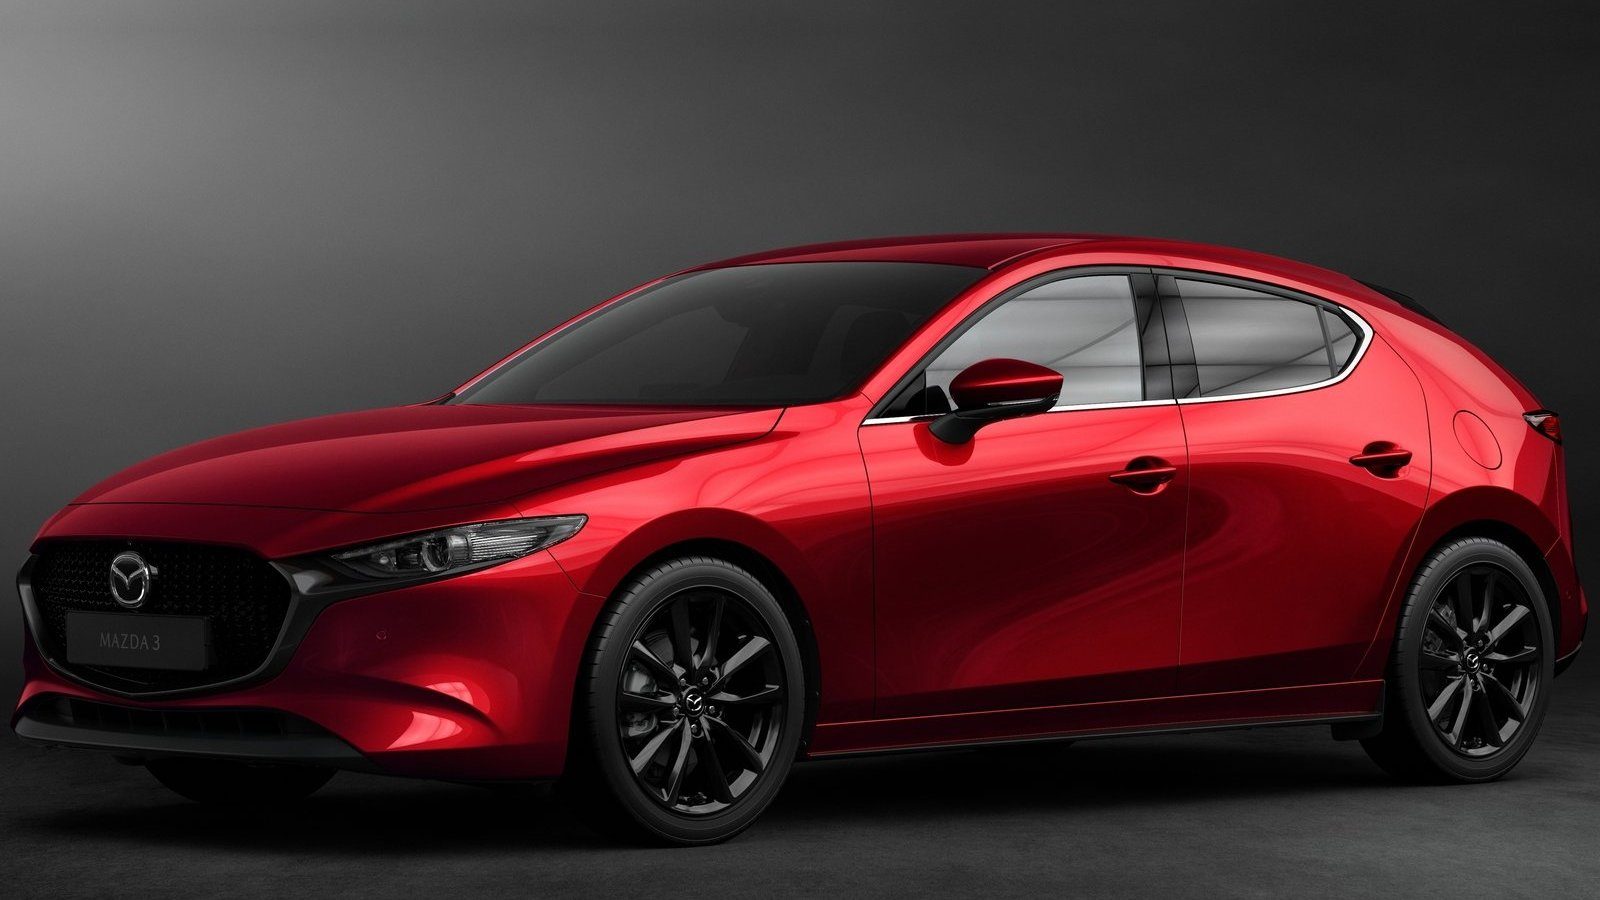 Mazda-3-2019-Hatchback-Sedan-26-1600x900.jpg